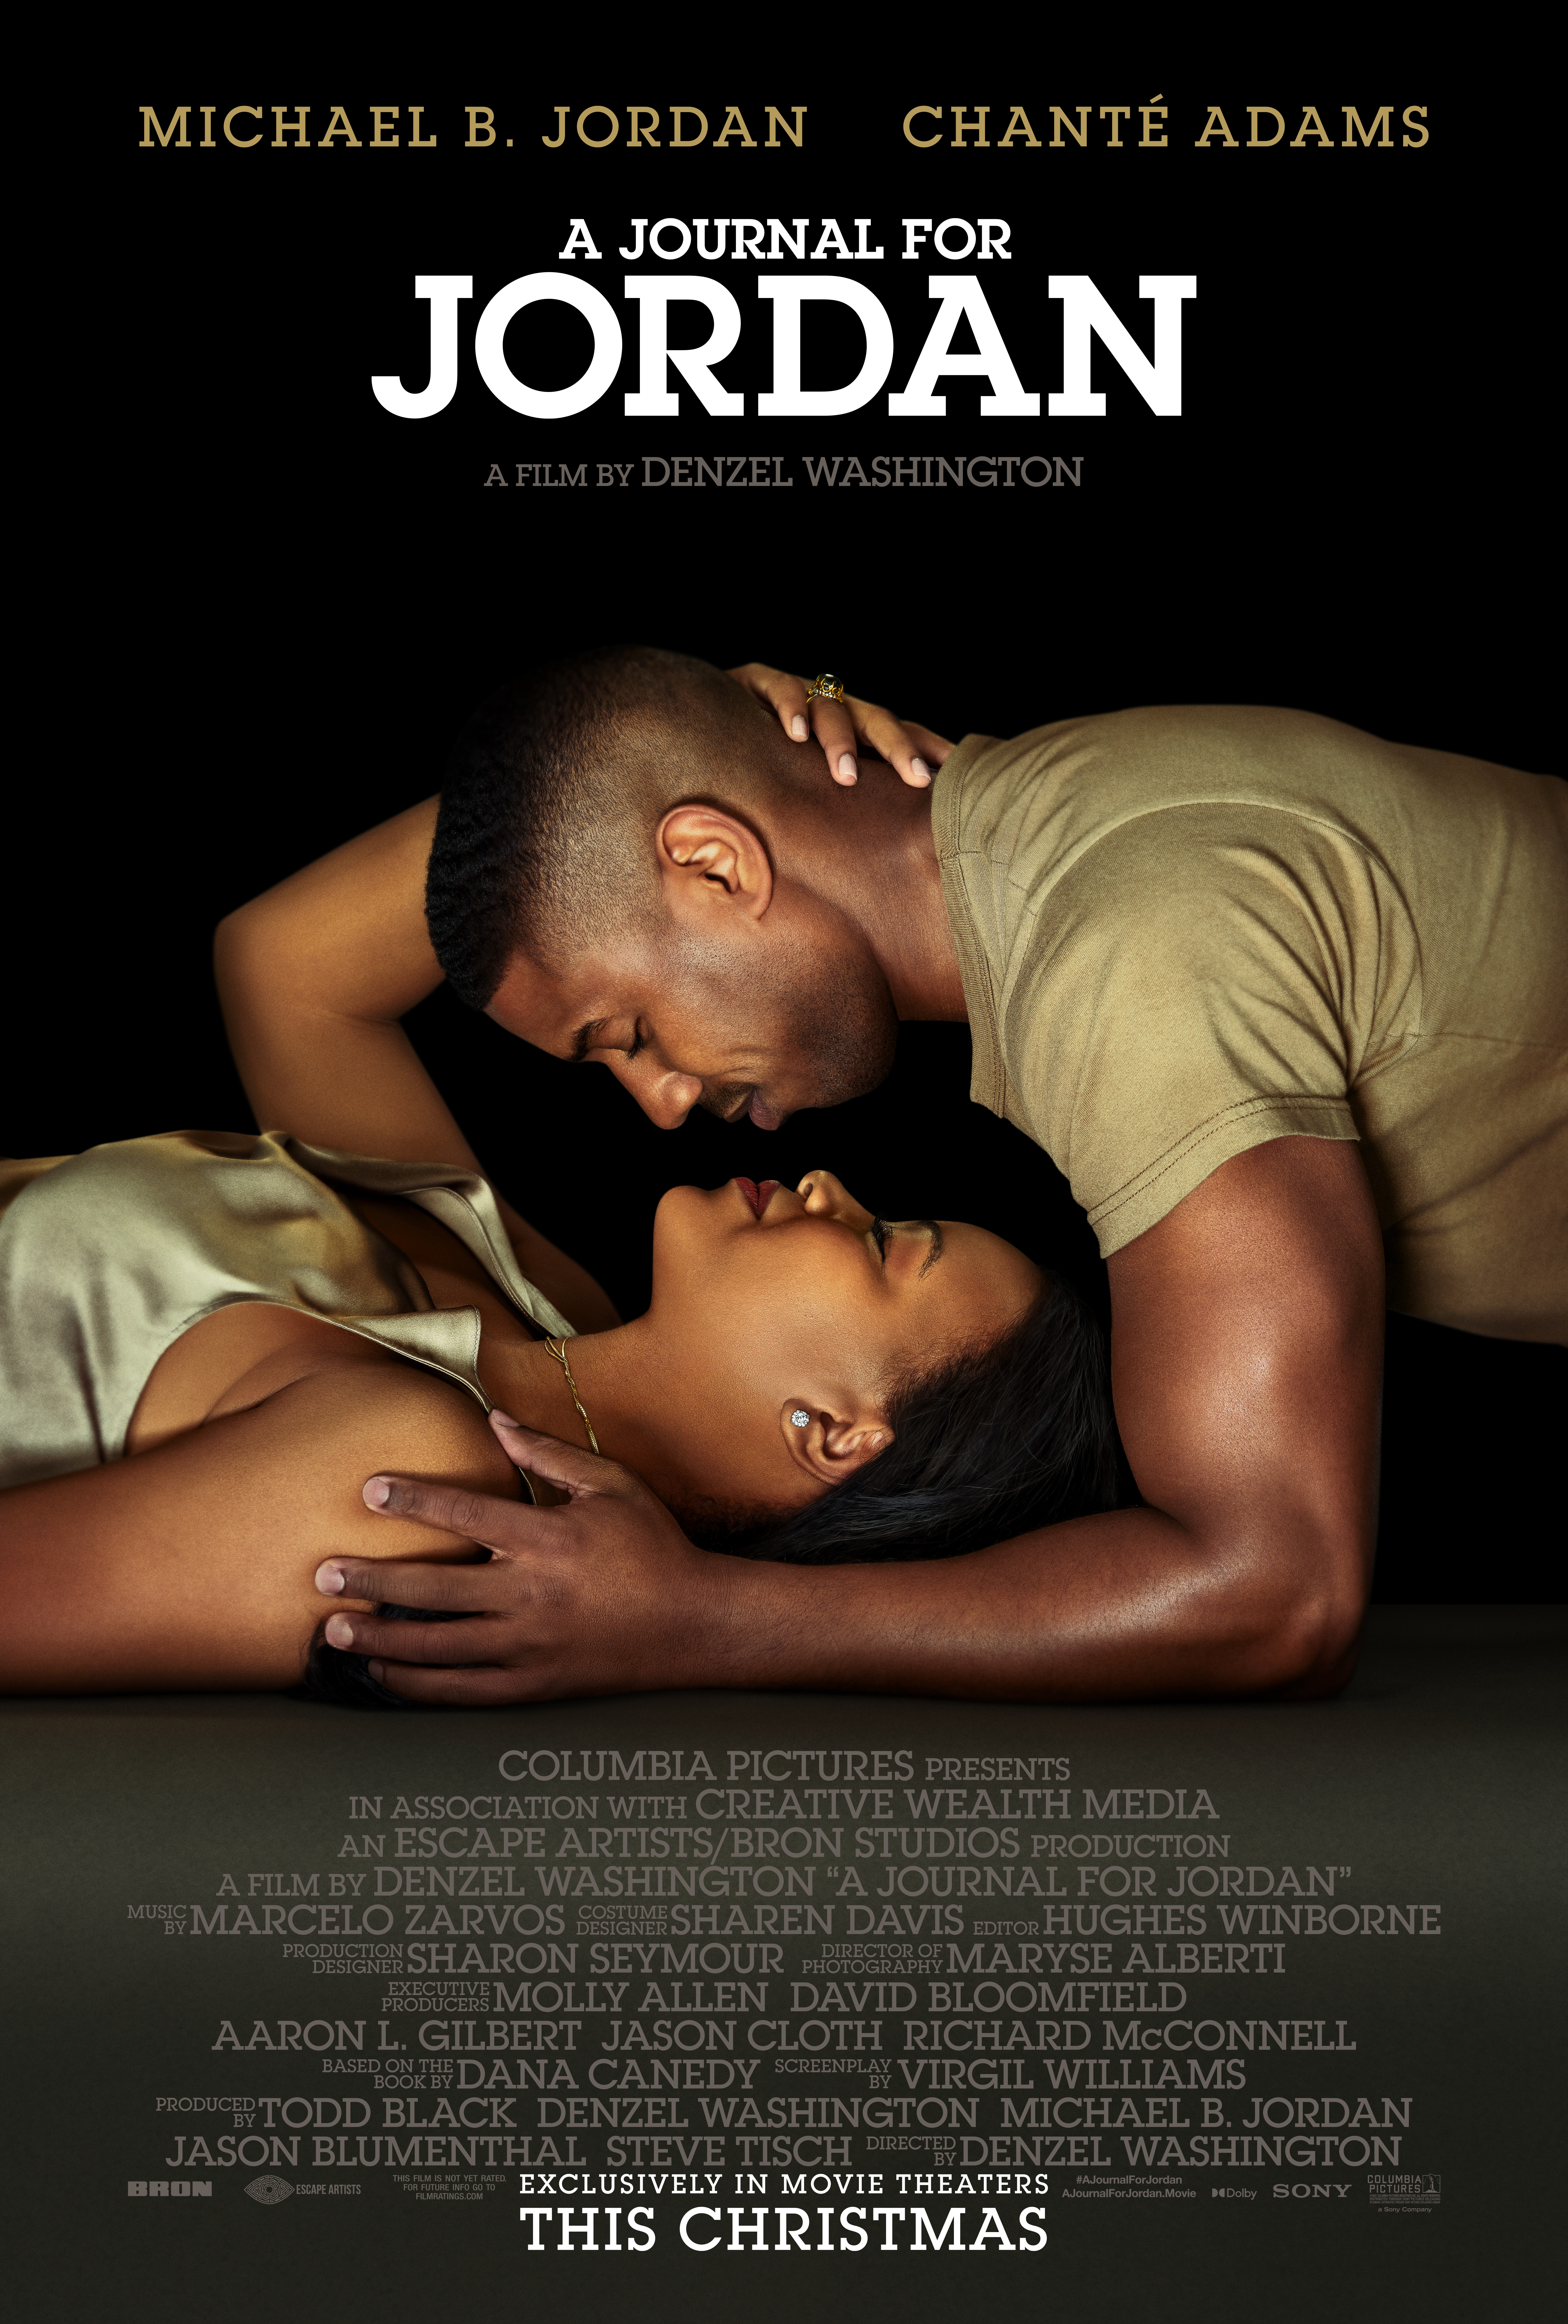 Michael B. Jordan Explains Why He Wanted Make a Romance Film